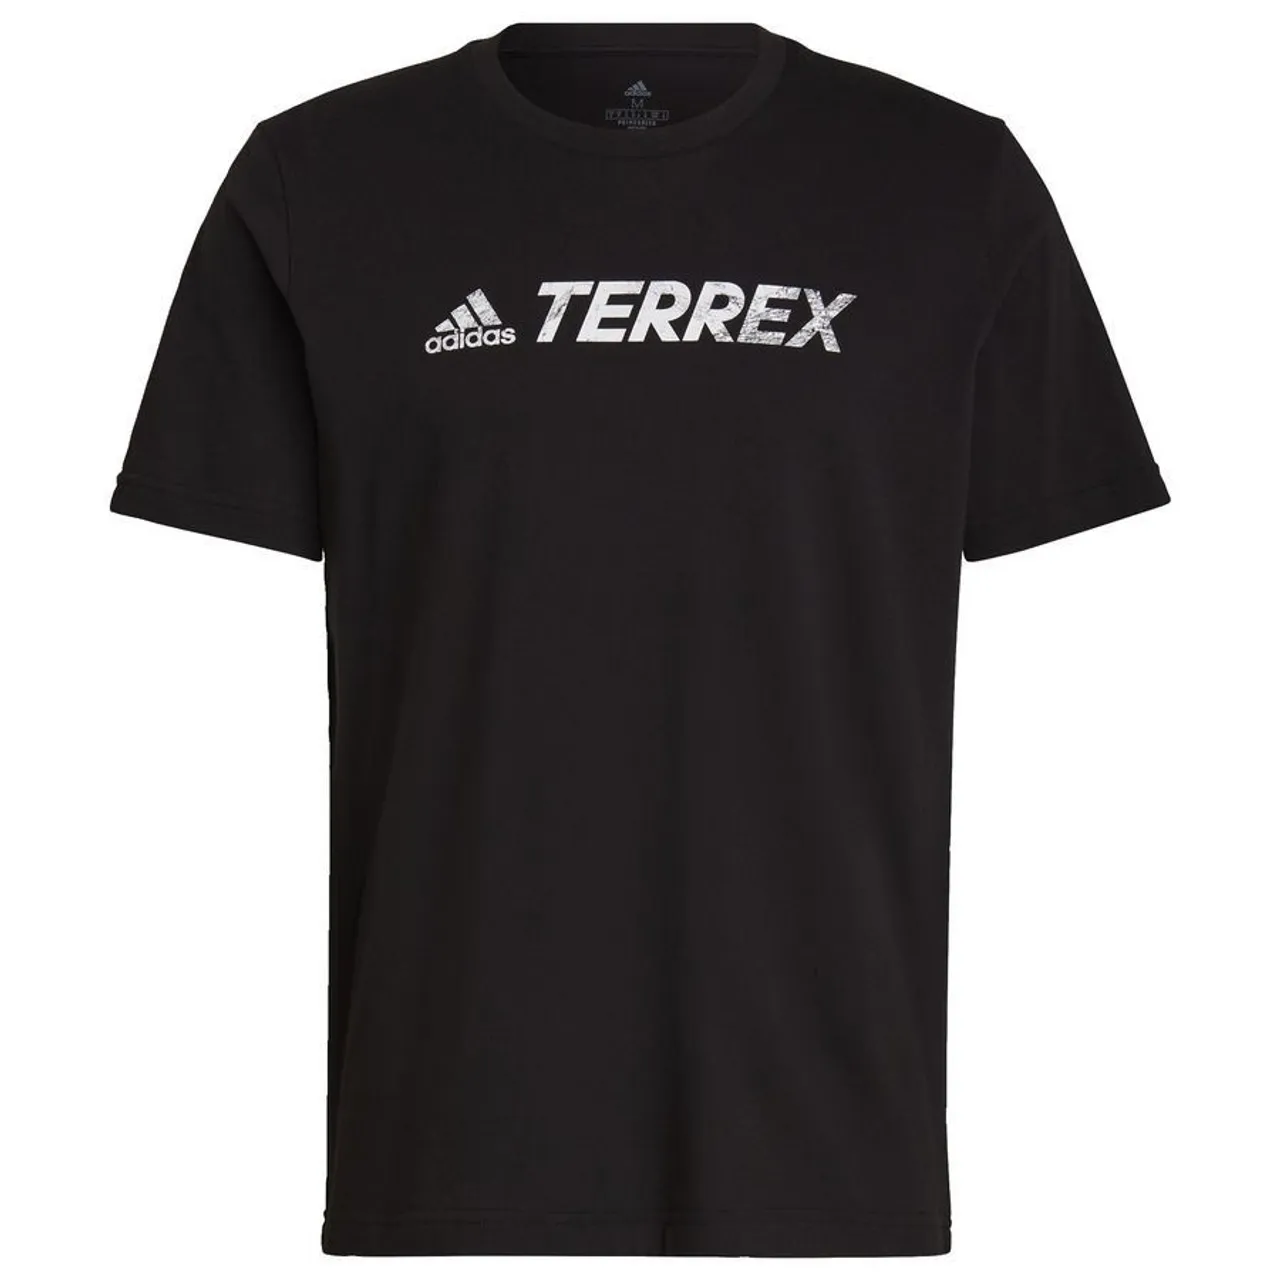 adidas T-Shirt Terrex - Schwarz